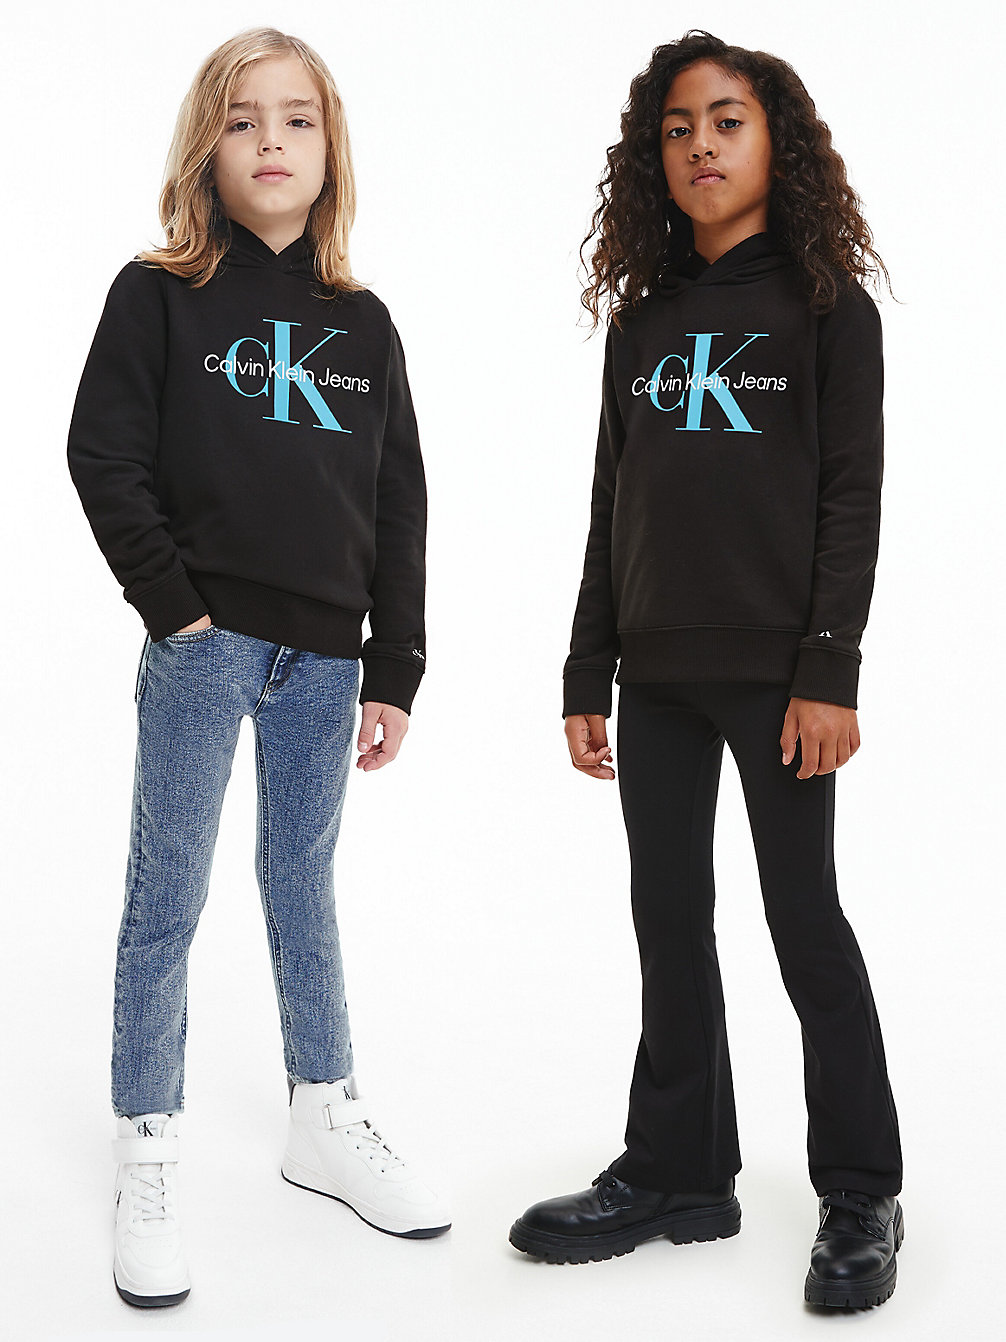 Sweat-Shirt À Capuche Unisexe Avec Logo Ok > CK BLACK > undefined kids unisex > Calvin Klein